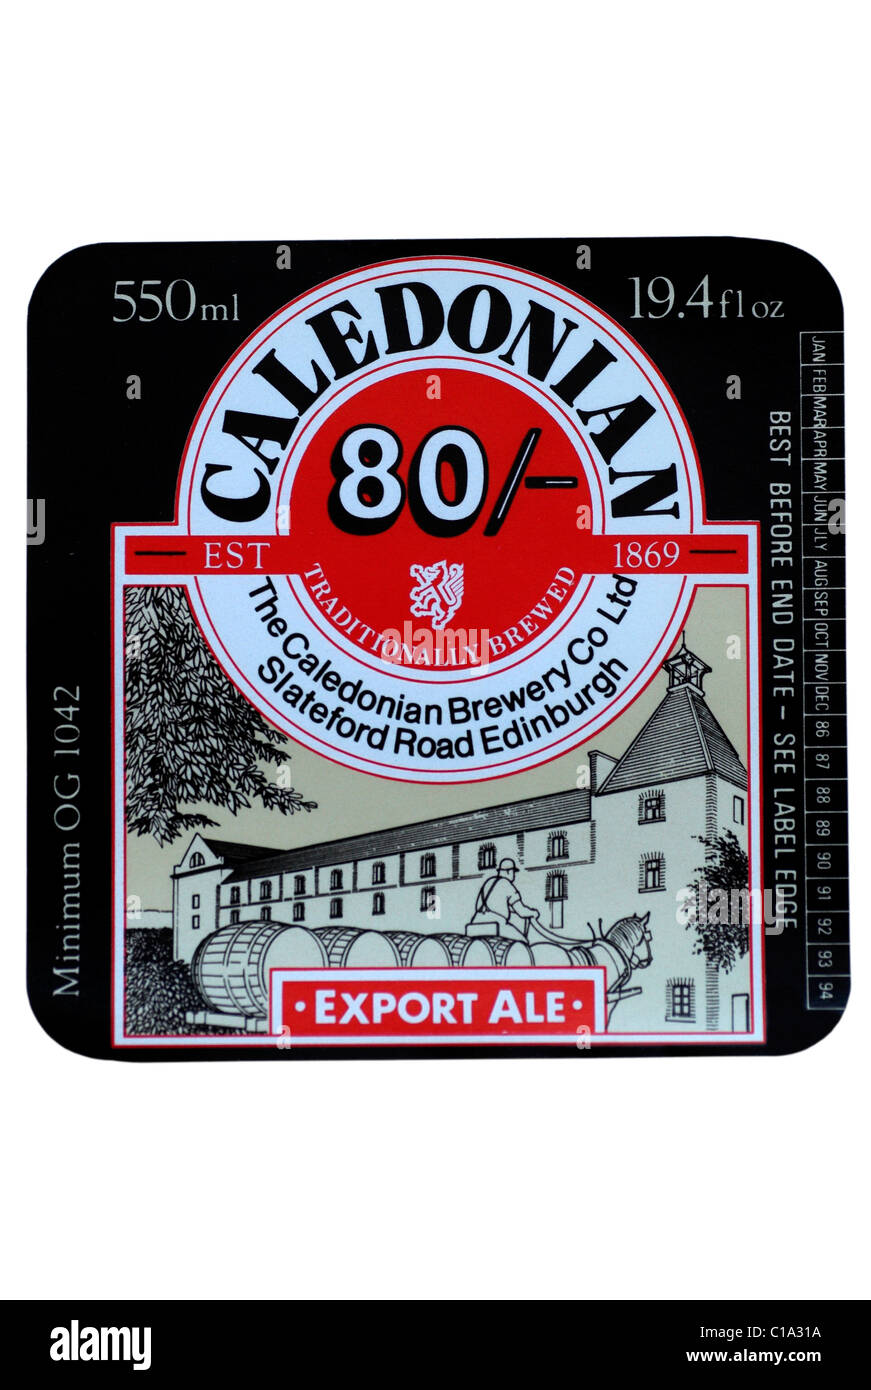 Caledonian 80/- Export Ale bottle label - 1986-1994. Stock Photo